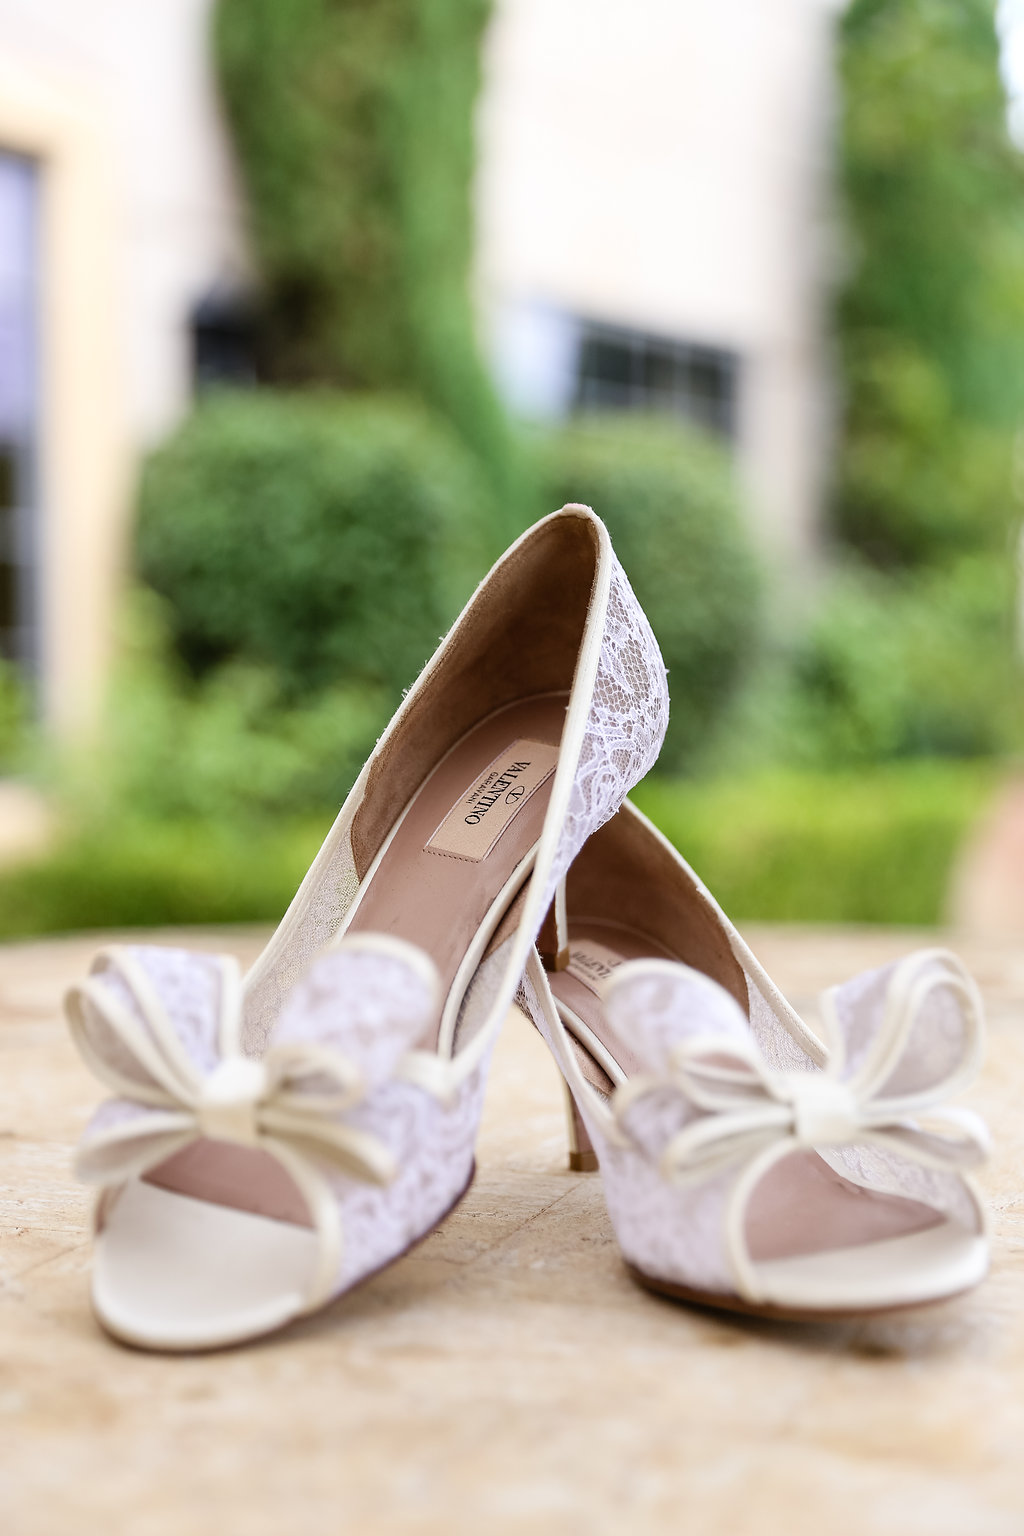 Gorgeous White Wedding Shoes - Gorgeous Seal Beach Wedding Venue - Old Country Club Wedding